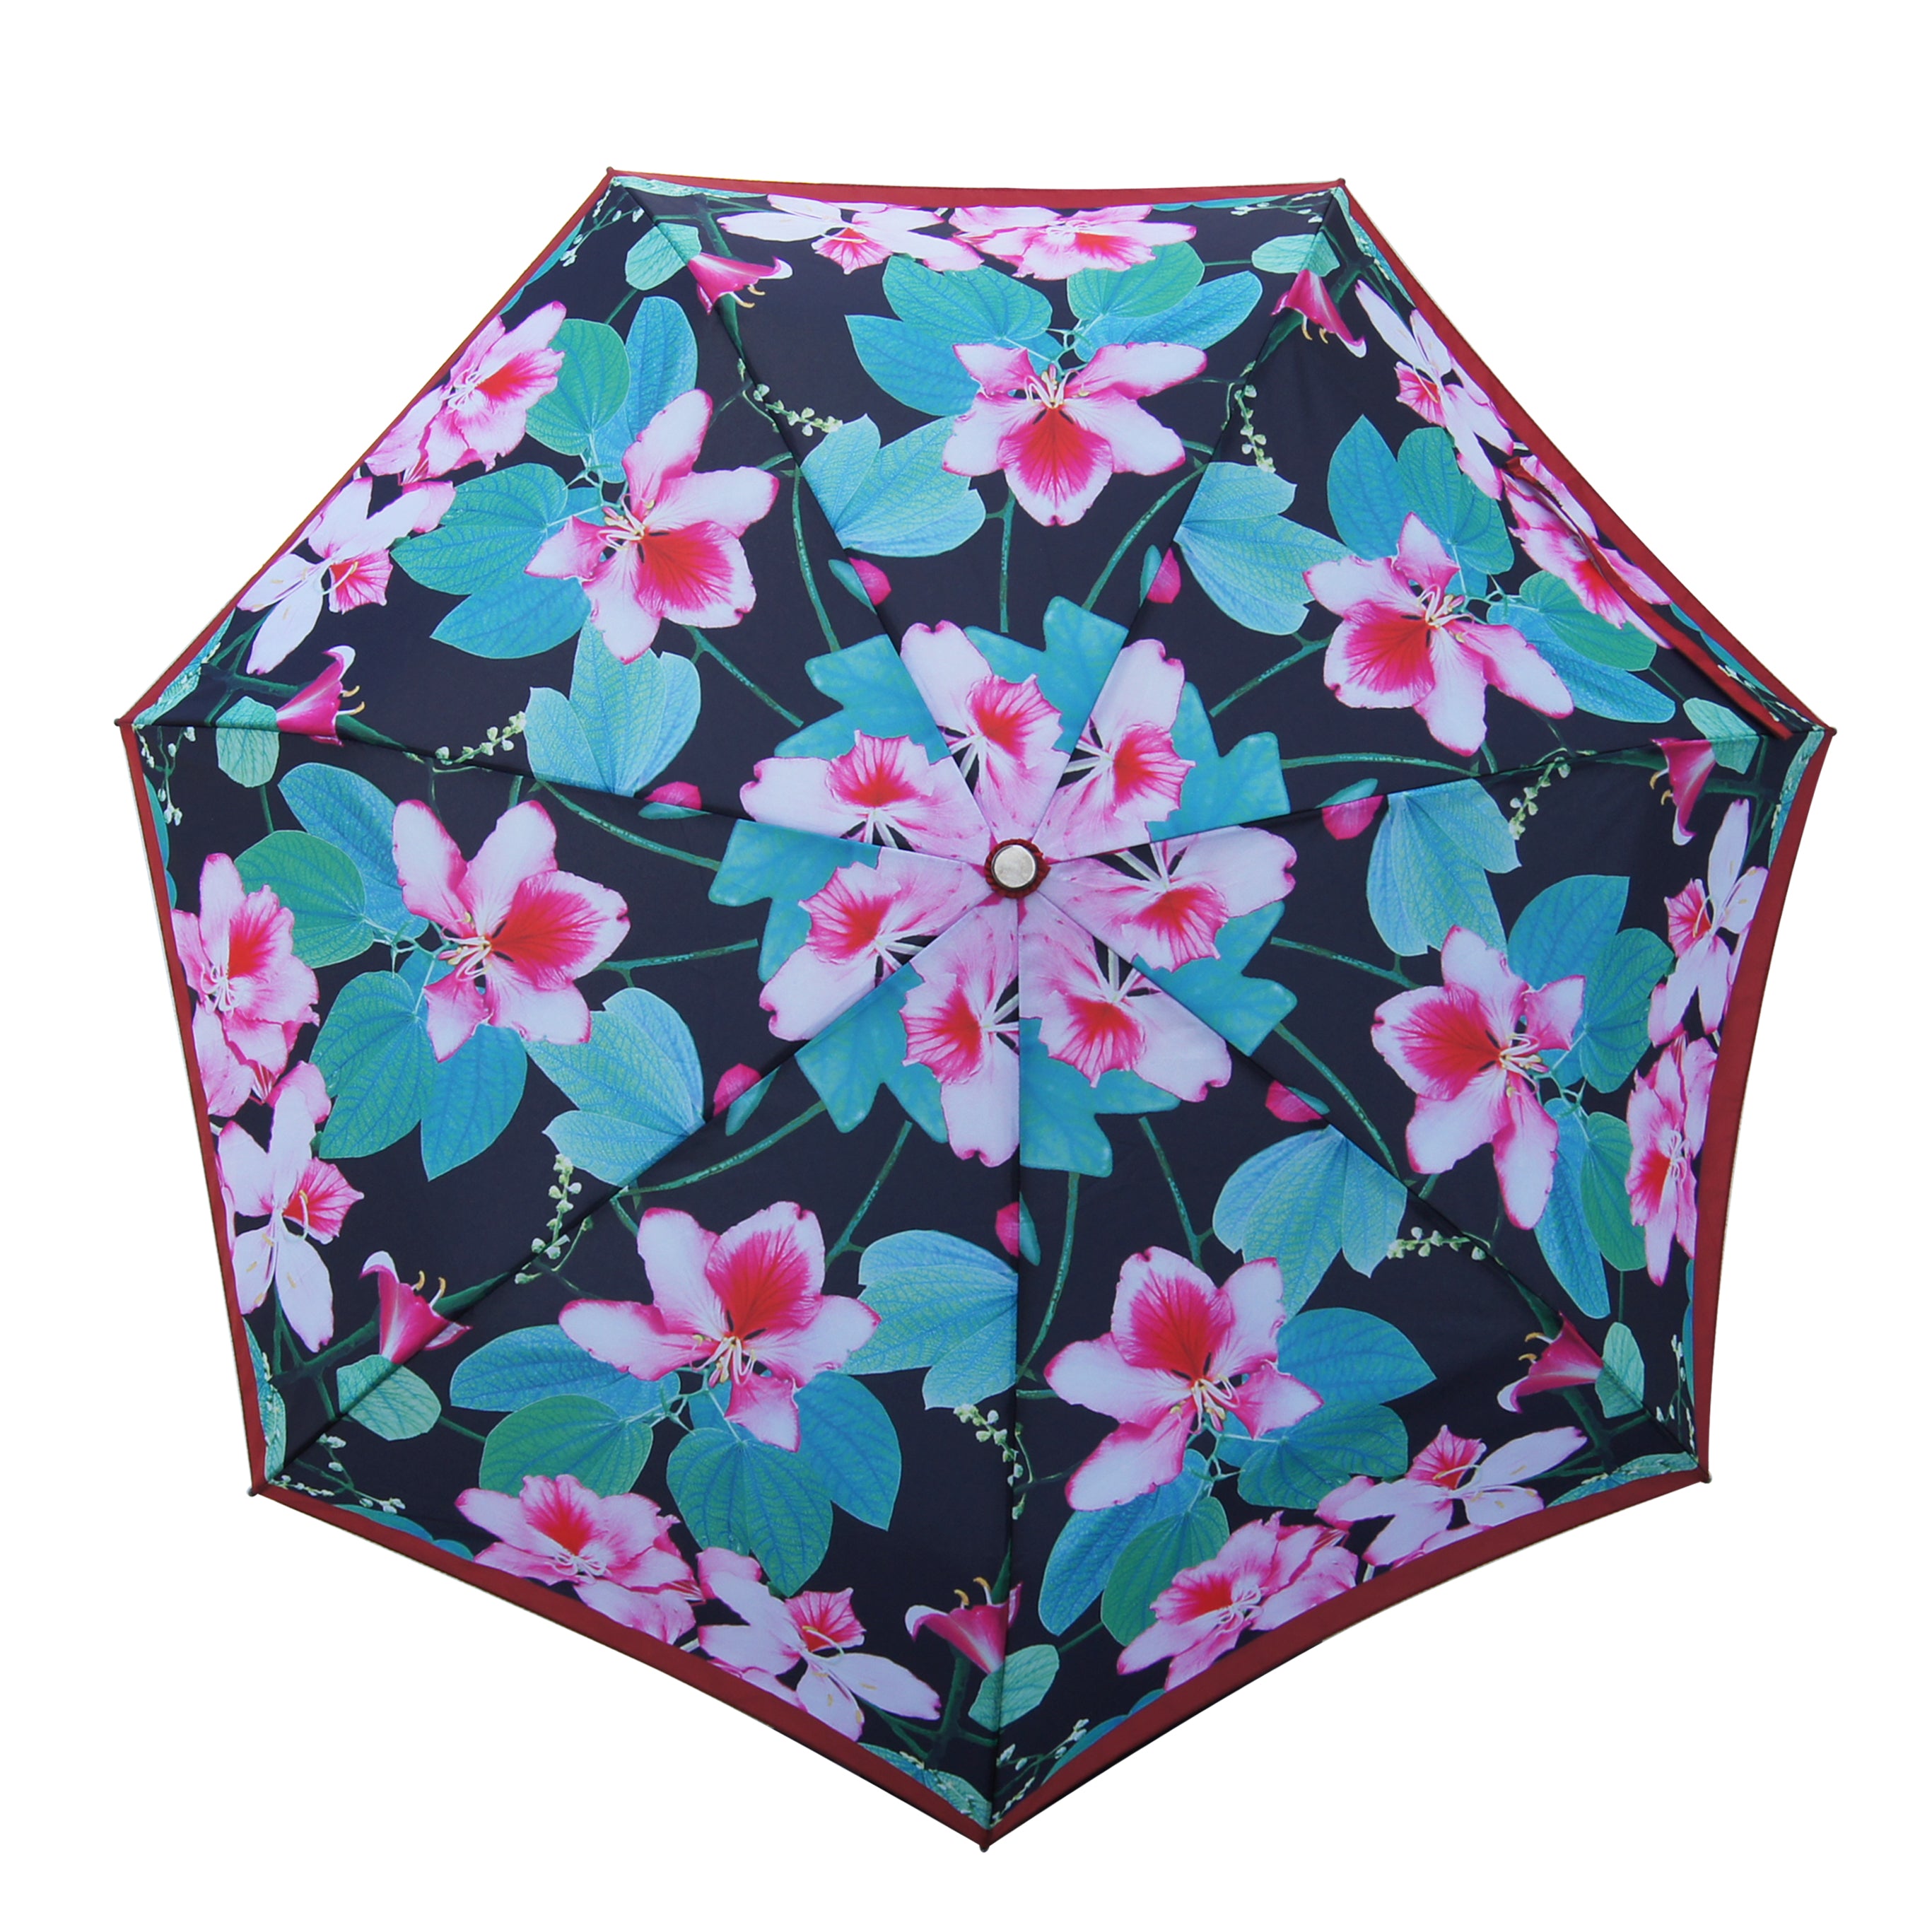 'Bauhinia Black' Teflon auto umbrella, Lifestyle, Goods of Desire, Goods of Desire